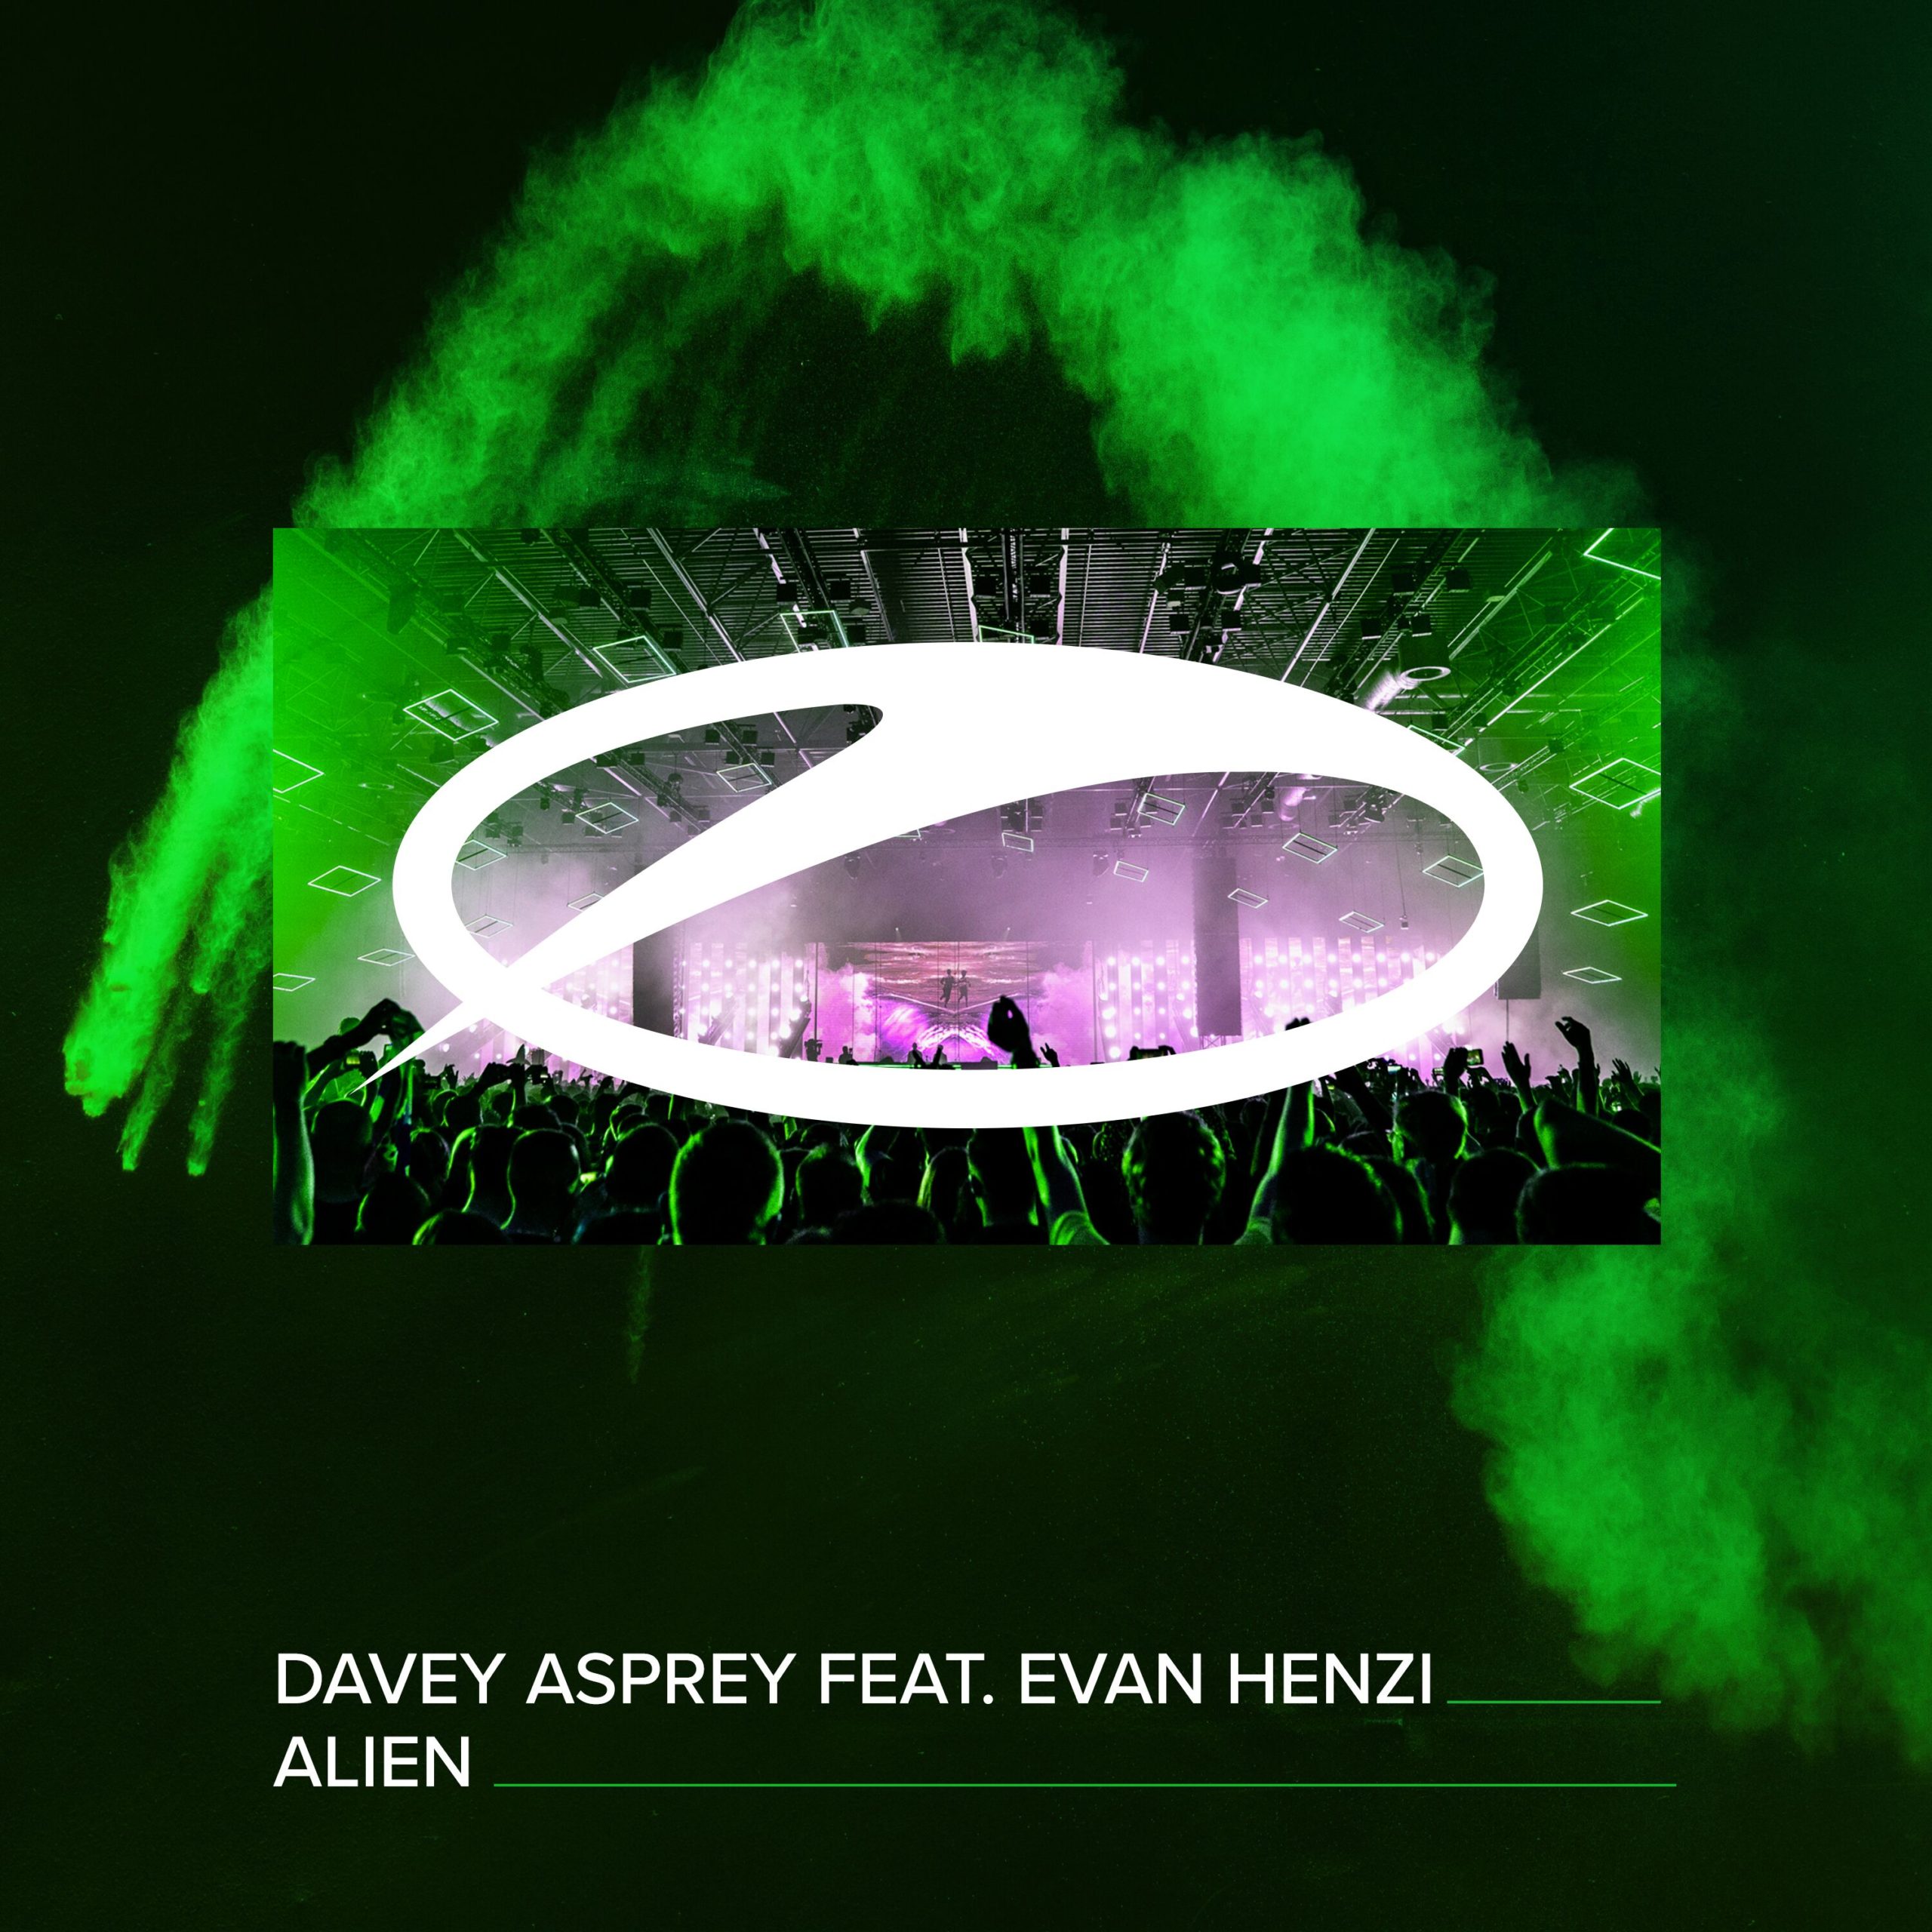 Davey Asprey feat. Evan Henzi presents ALIEN on Armada Music